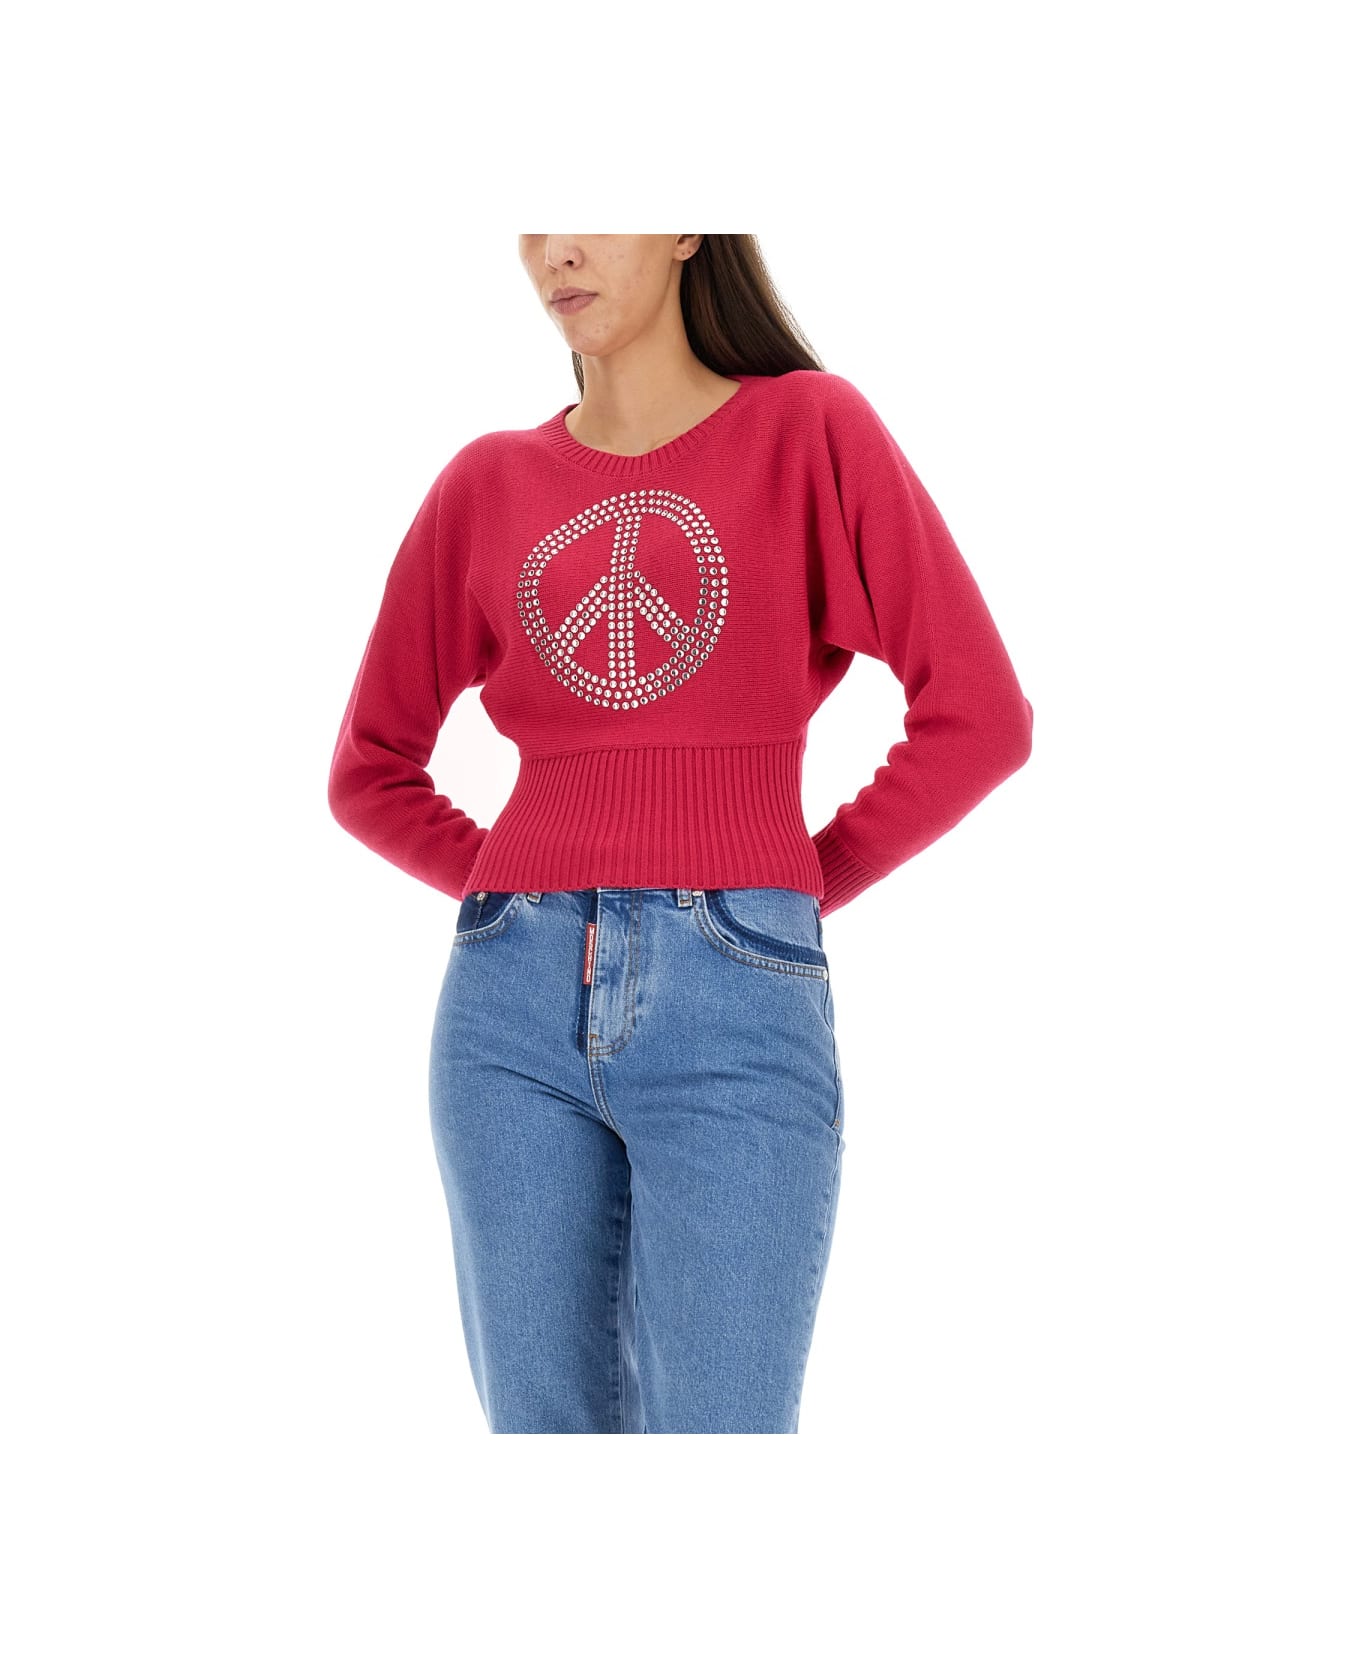 M05CH1N0 Jeans Peace Symbol Jersey - FUCHSIA